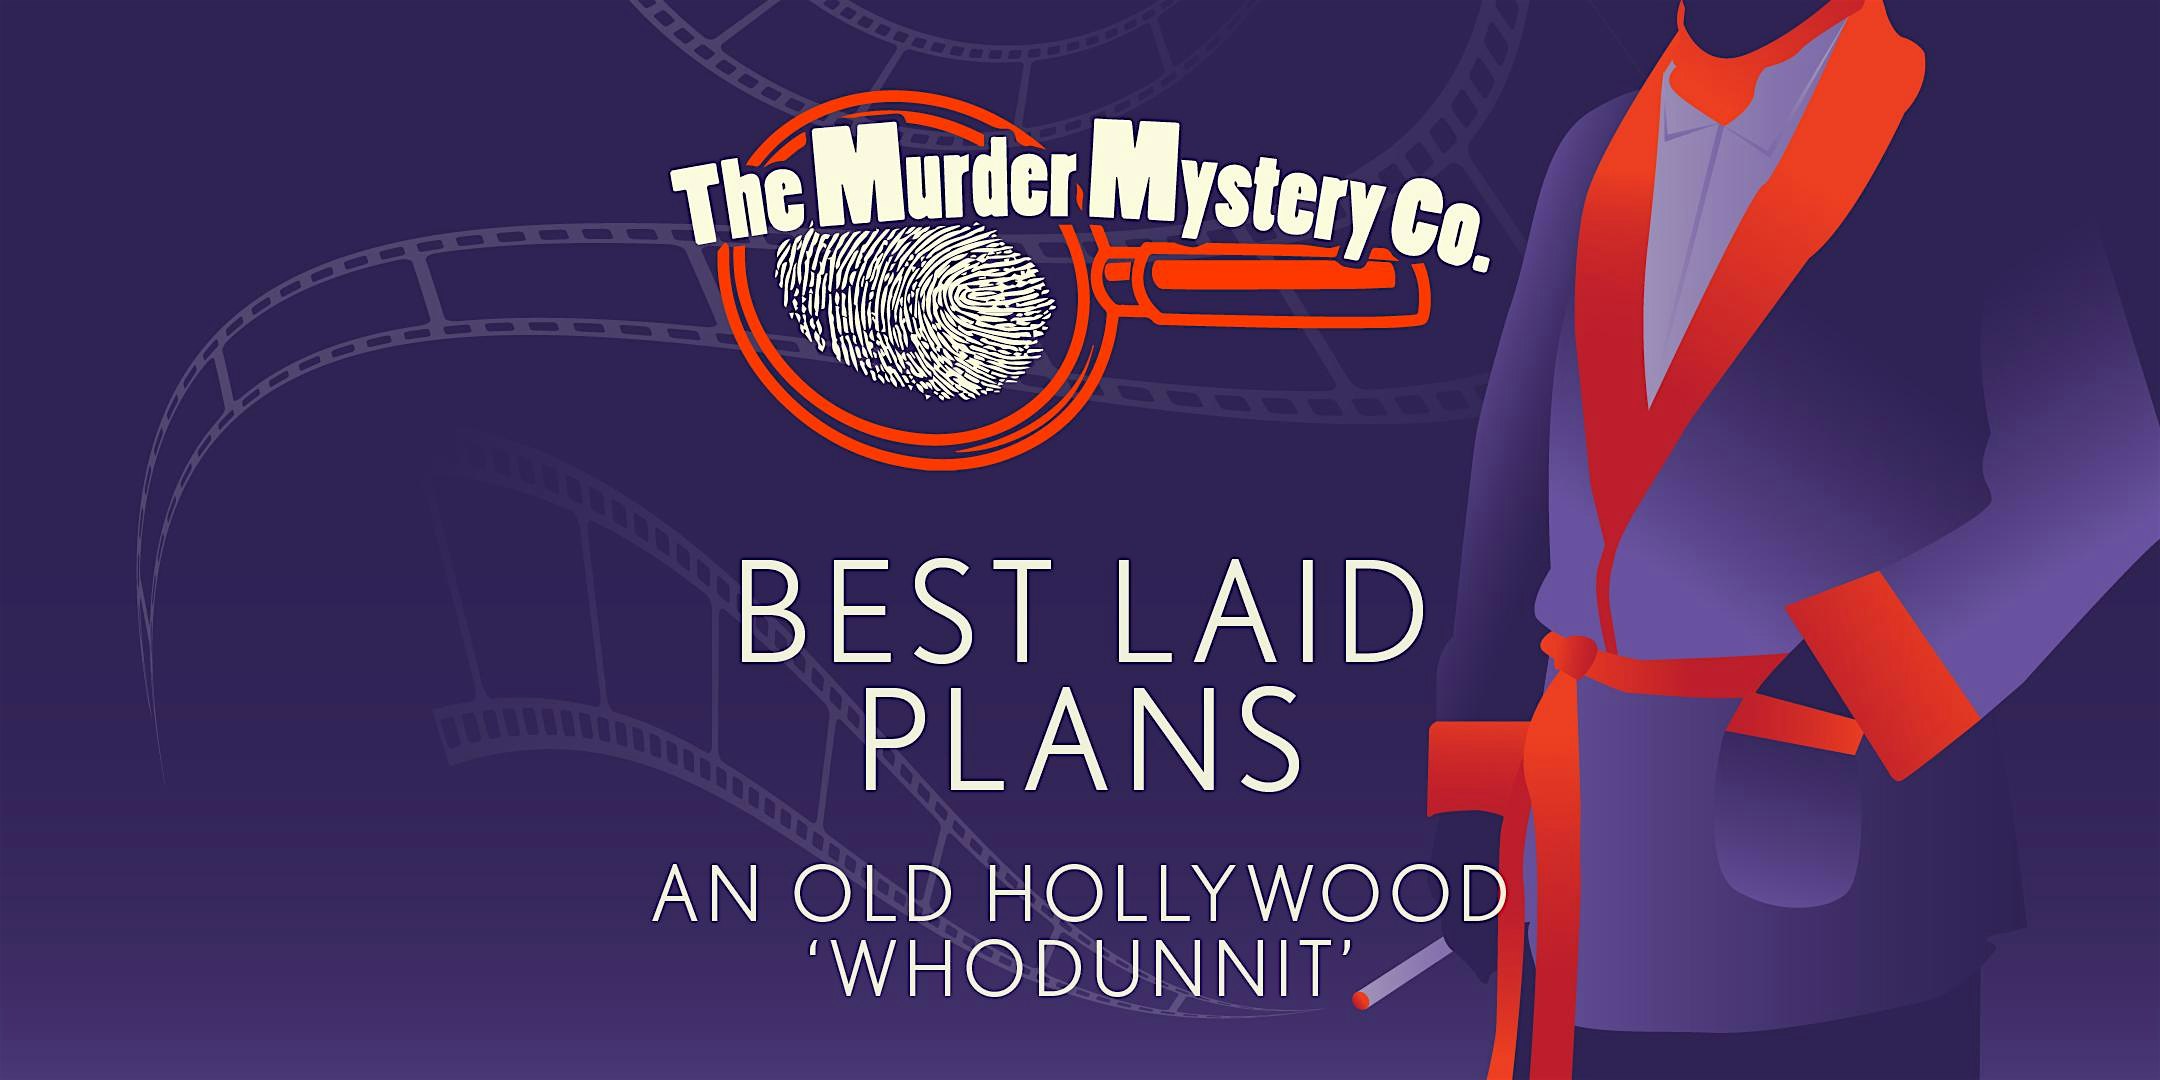 Murder Mystery Dinner Theater Show in Detroit: Best Laid Plans